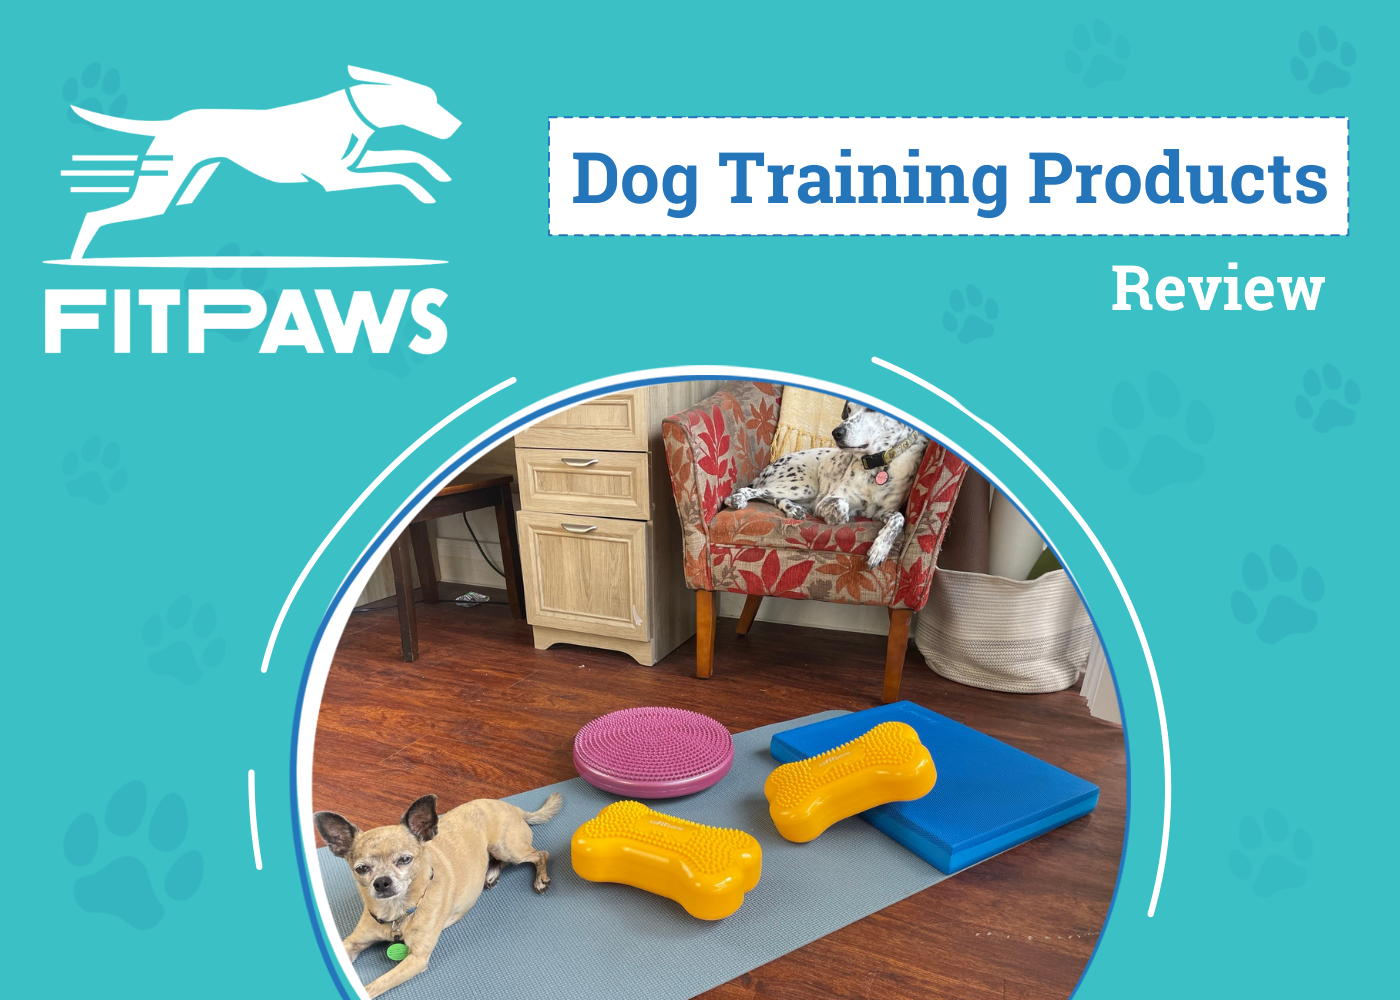 DOG_SAPR_Fitpaws Dog Training Products